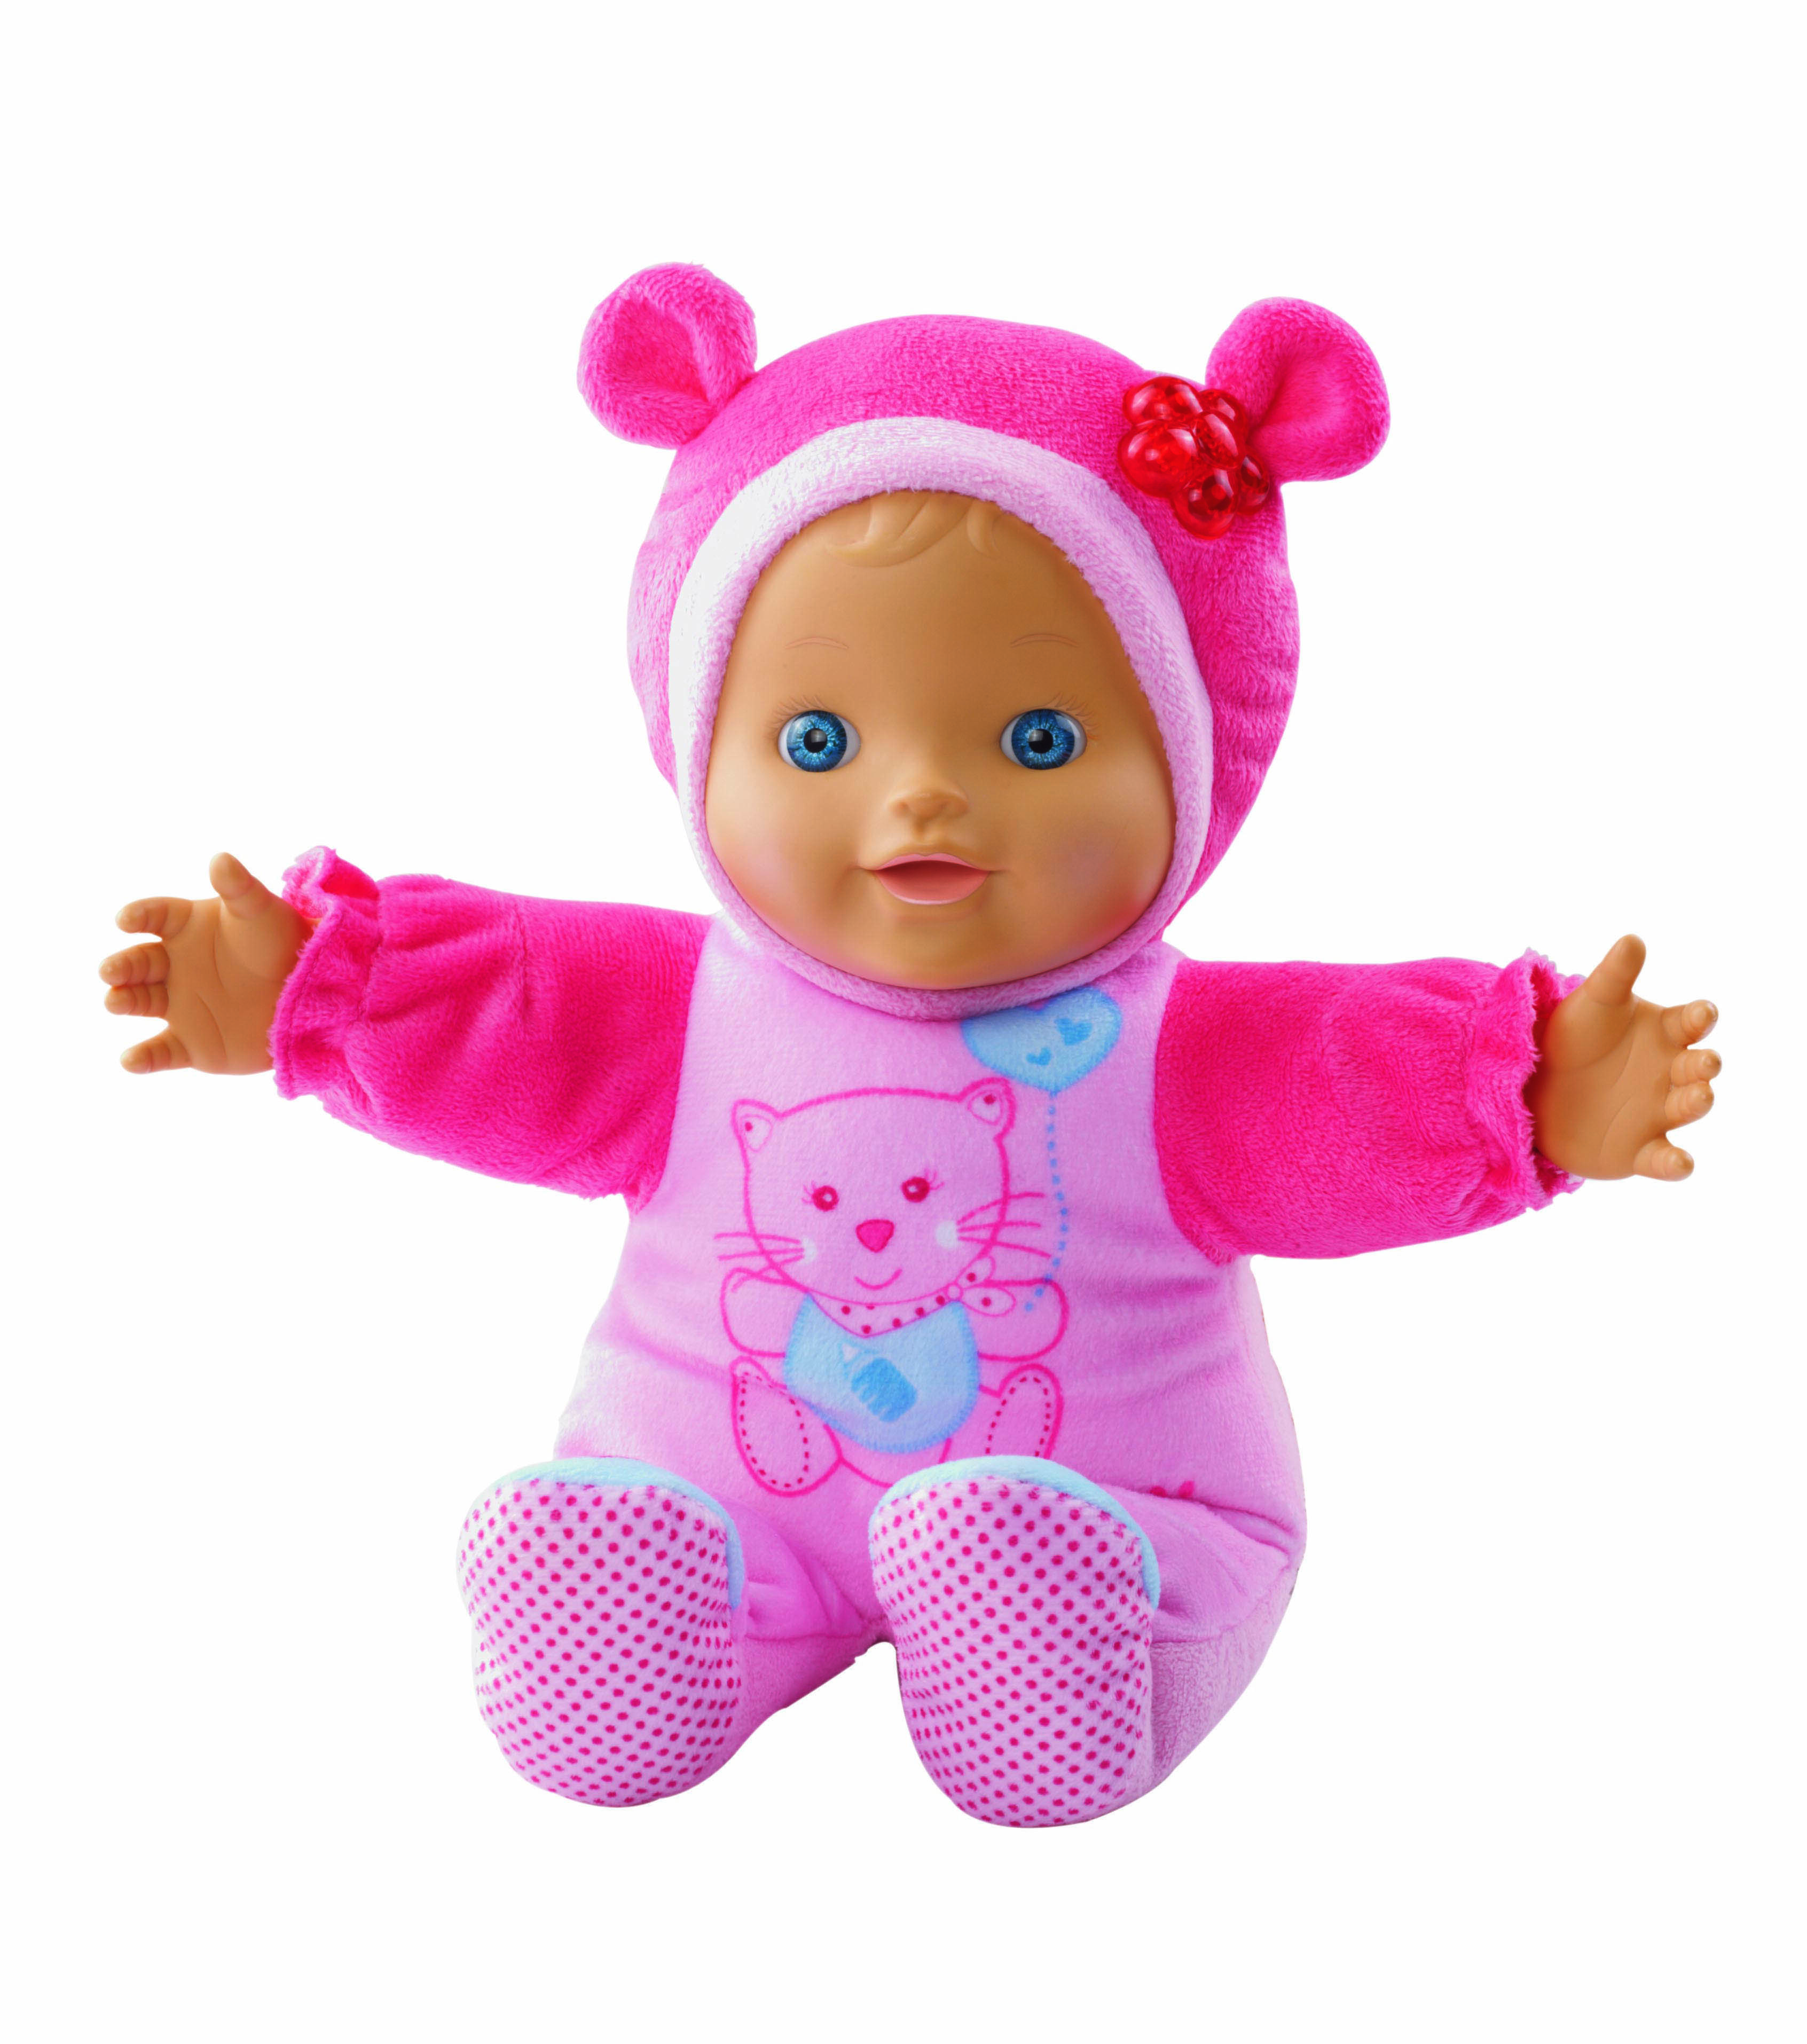 Rosi bebé, la primera muñeca interactiva de VTech